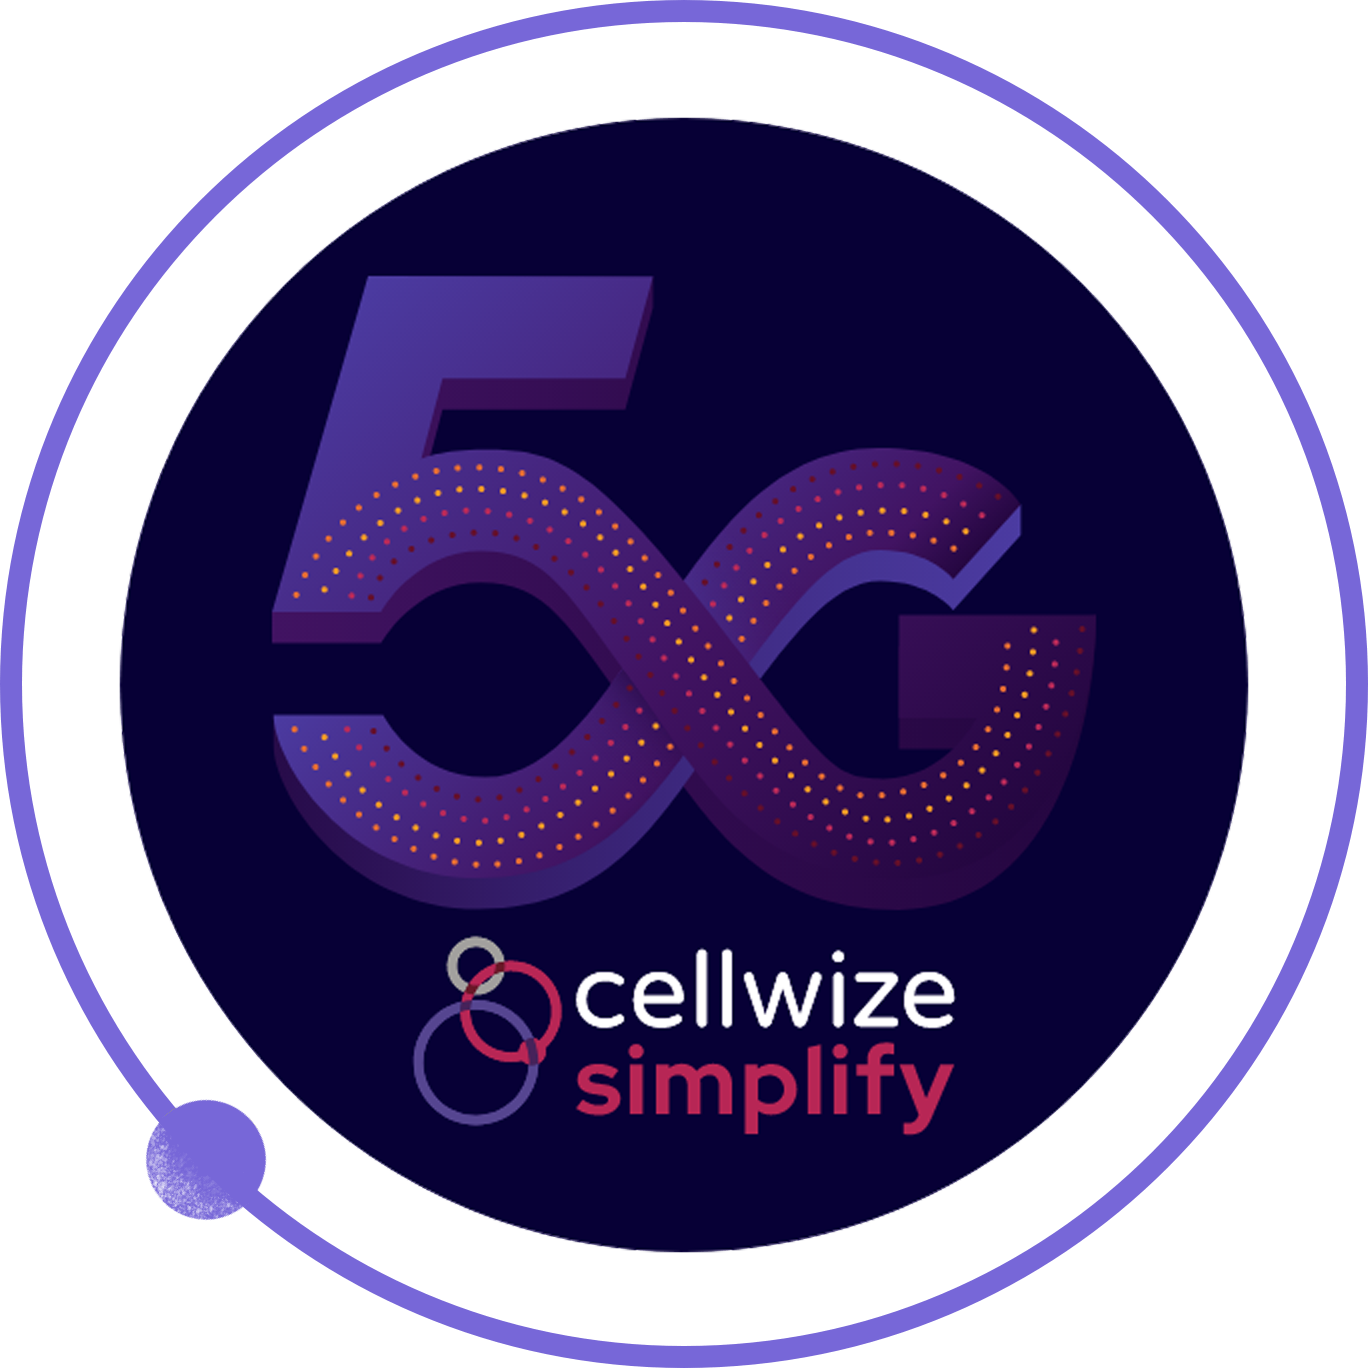 x Cellwize Simplify G Infinity circle